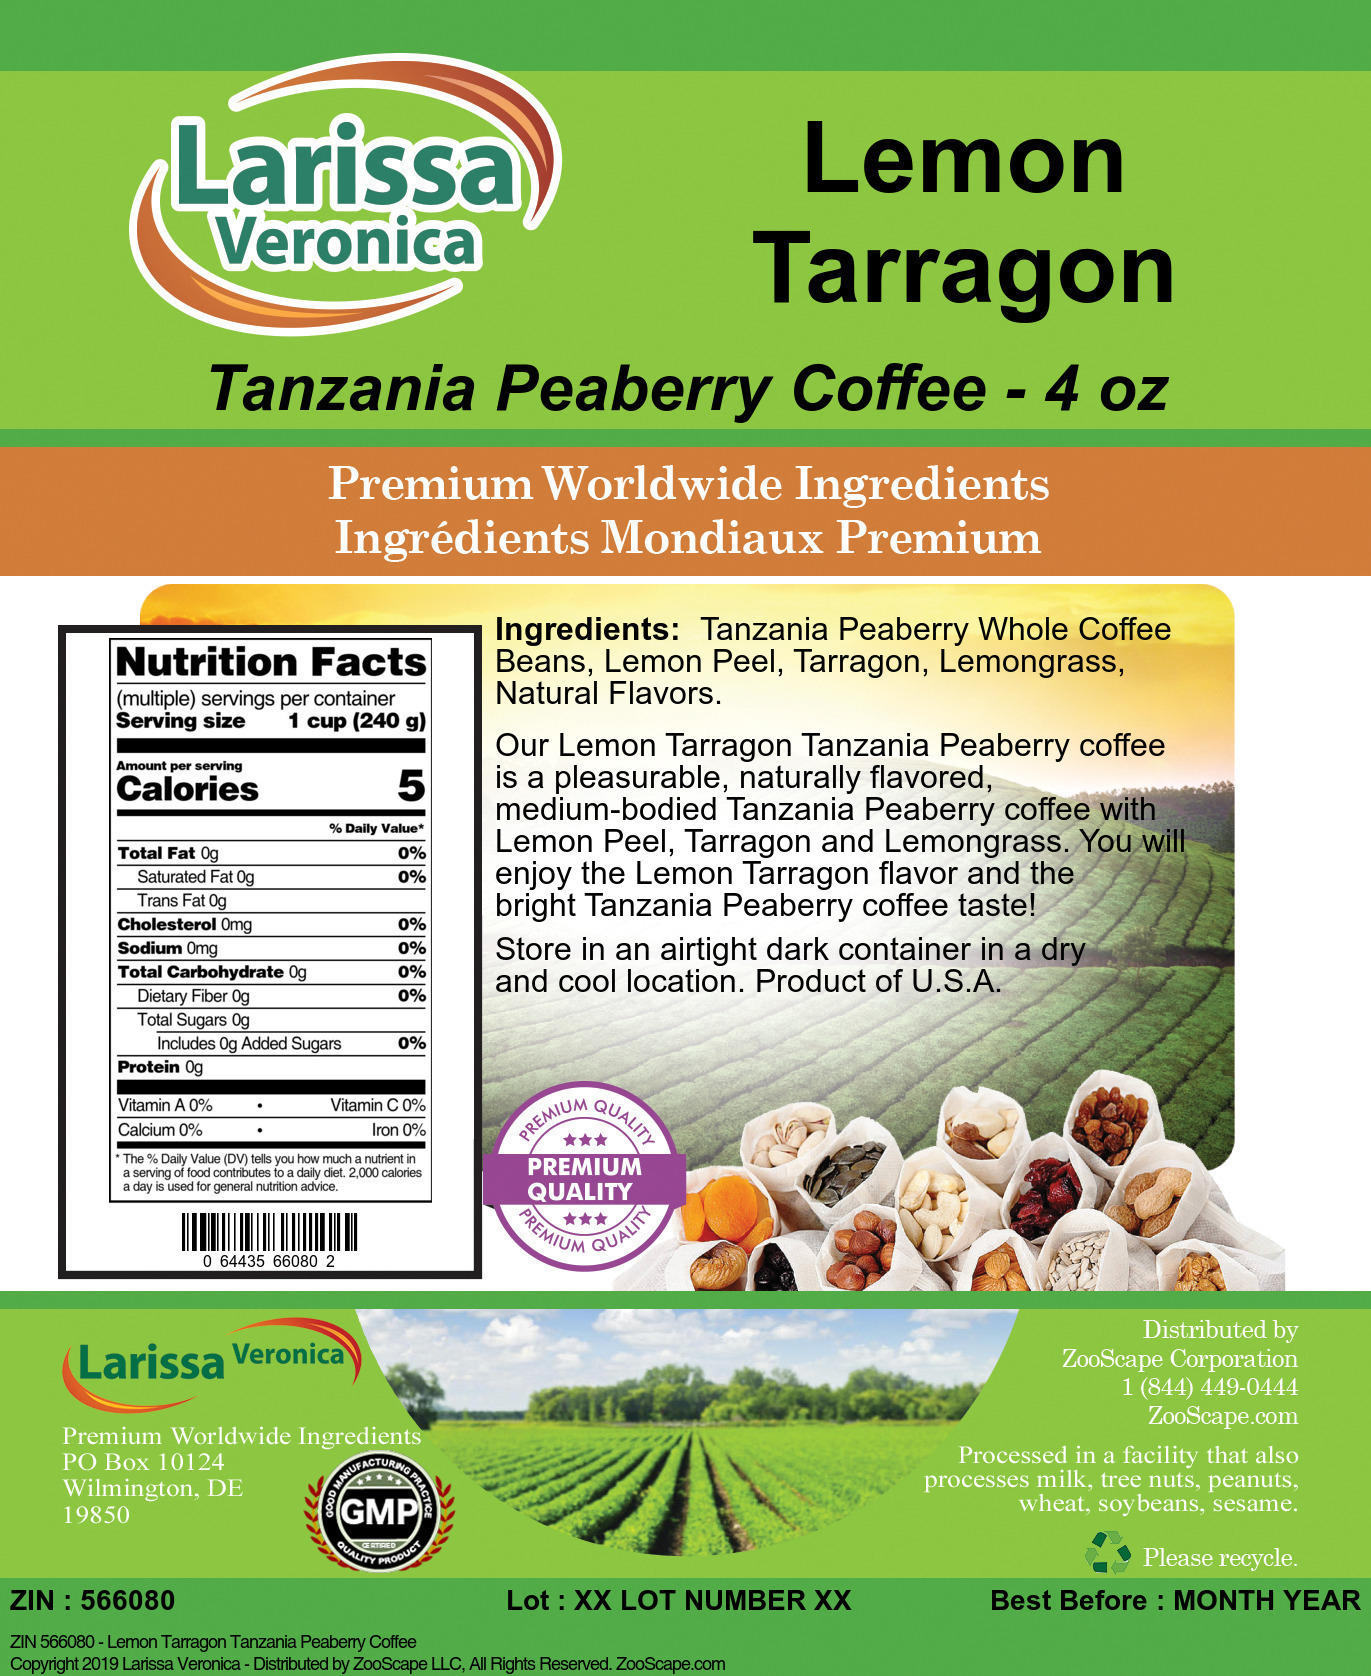 Lemon Tarragon Tanzania Peaberry Coffee - Label